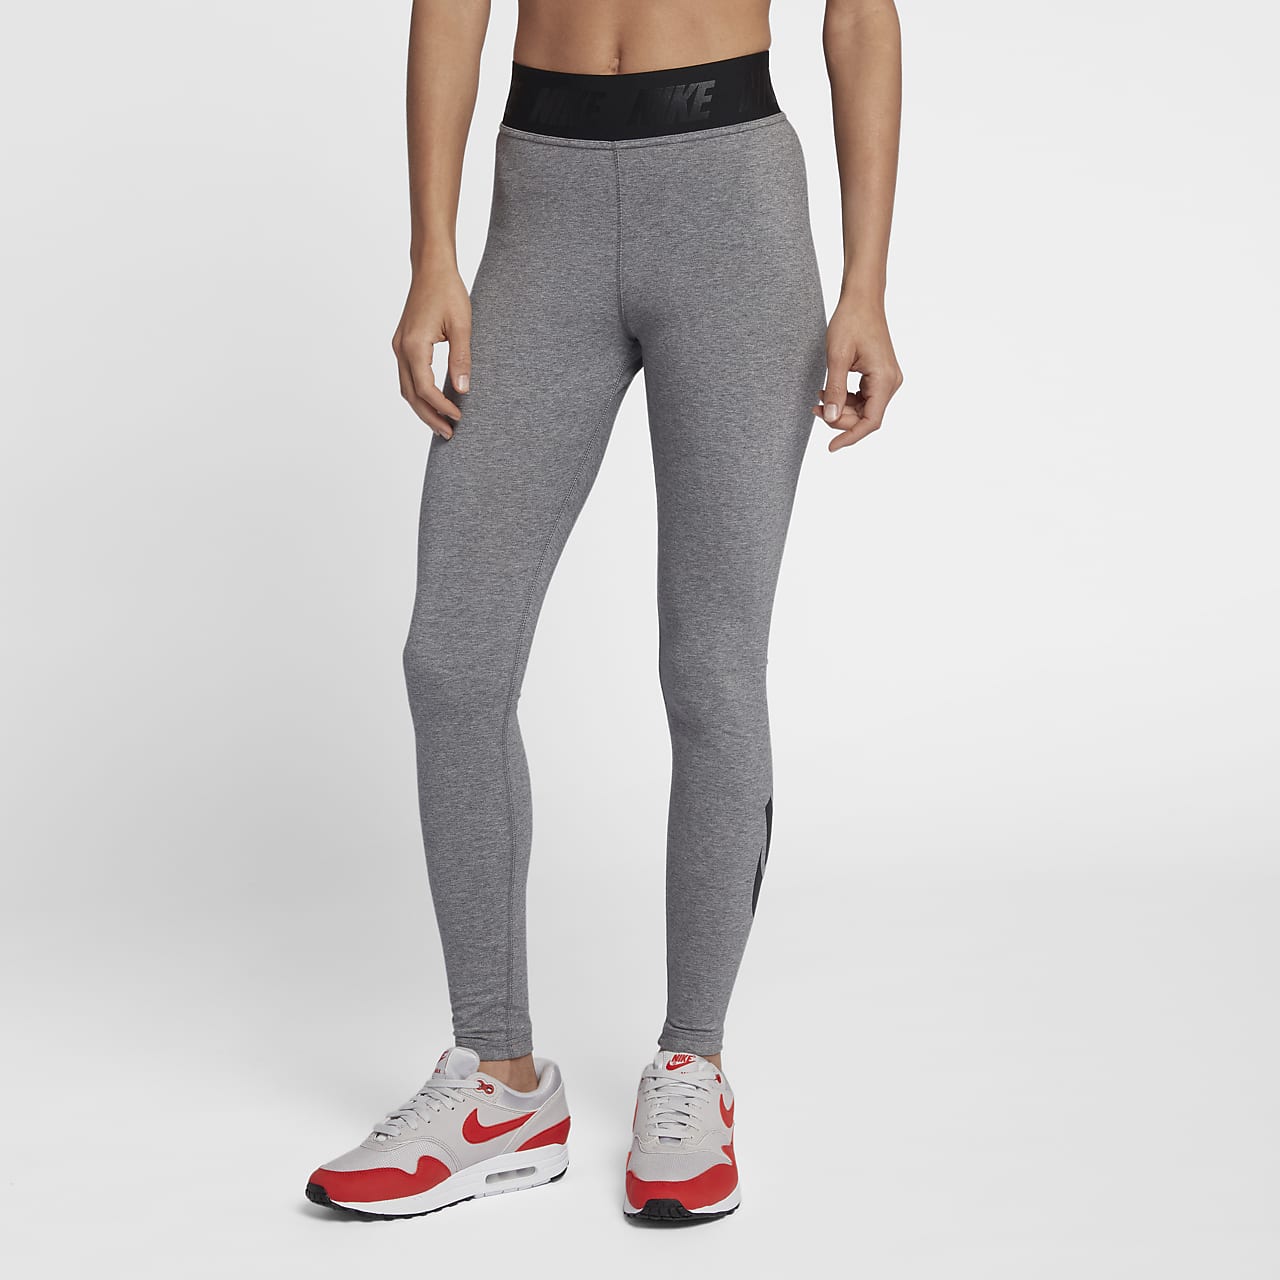 Women's Nike Pro Tights & Leggings. Nike AU